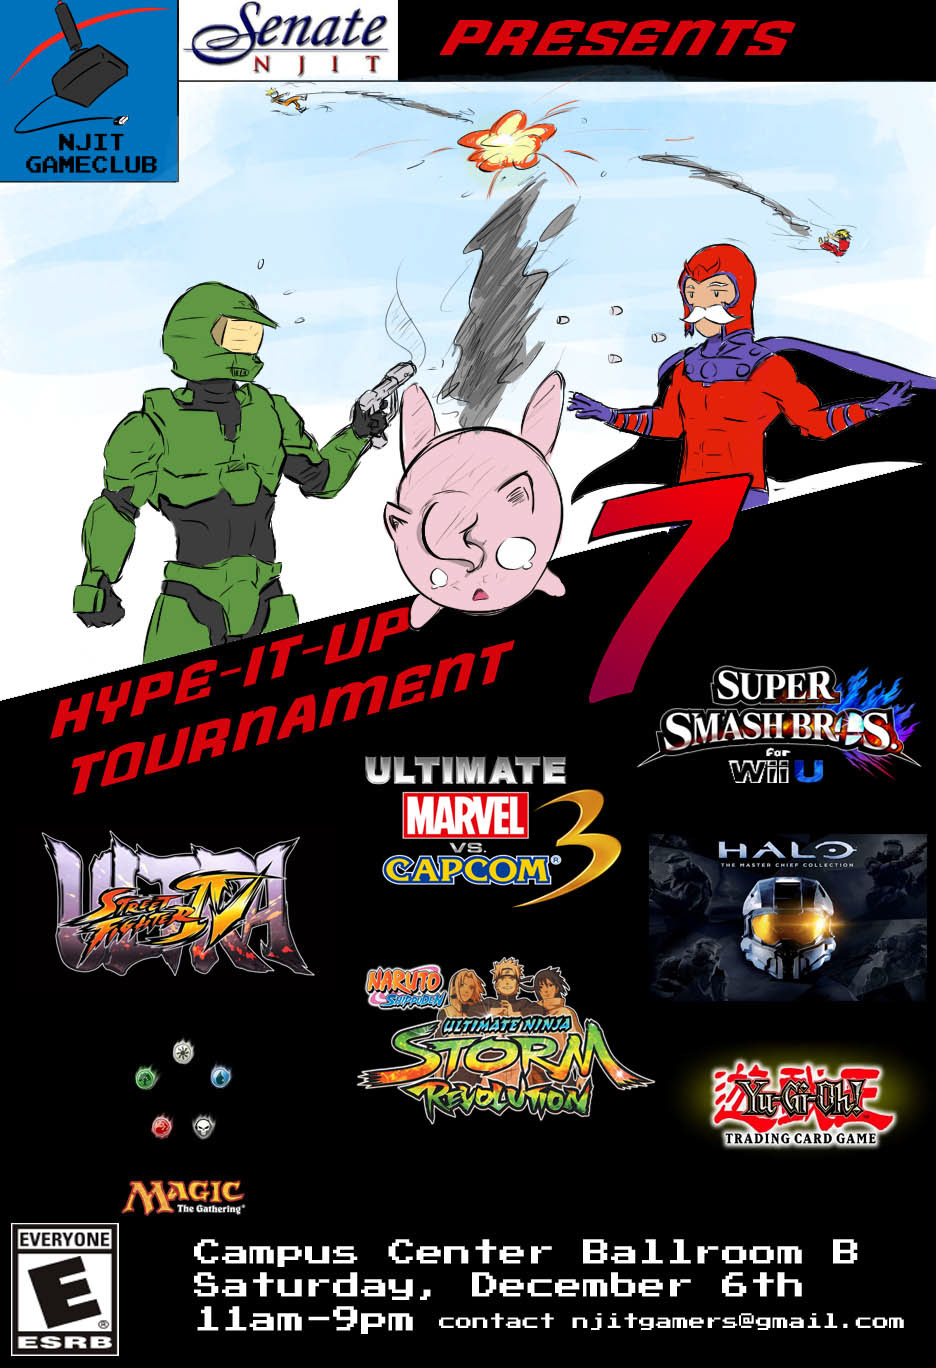 Adobe Portfolio posters Video Games tournaments Gameclub njit ngc